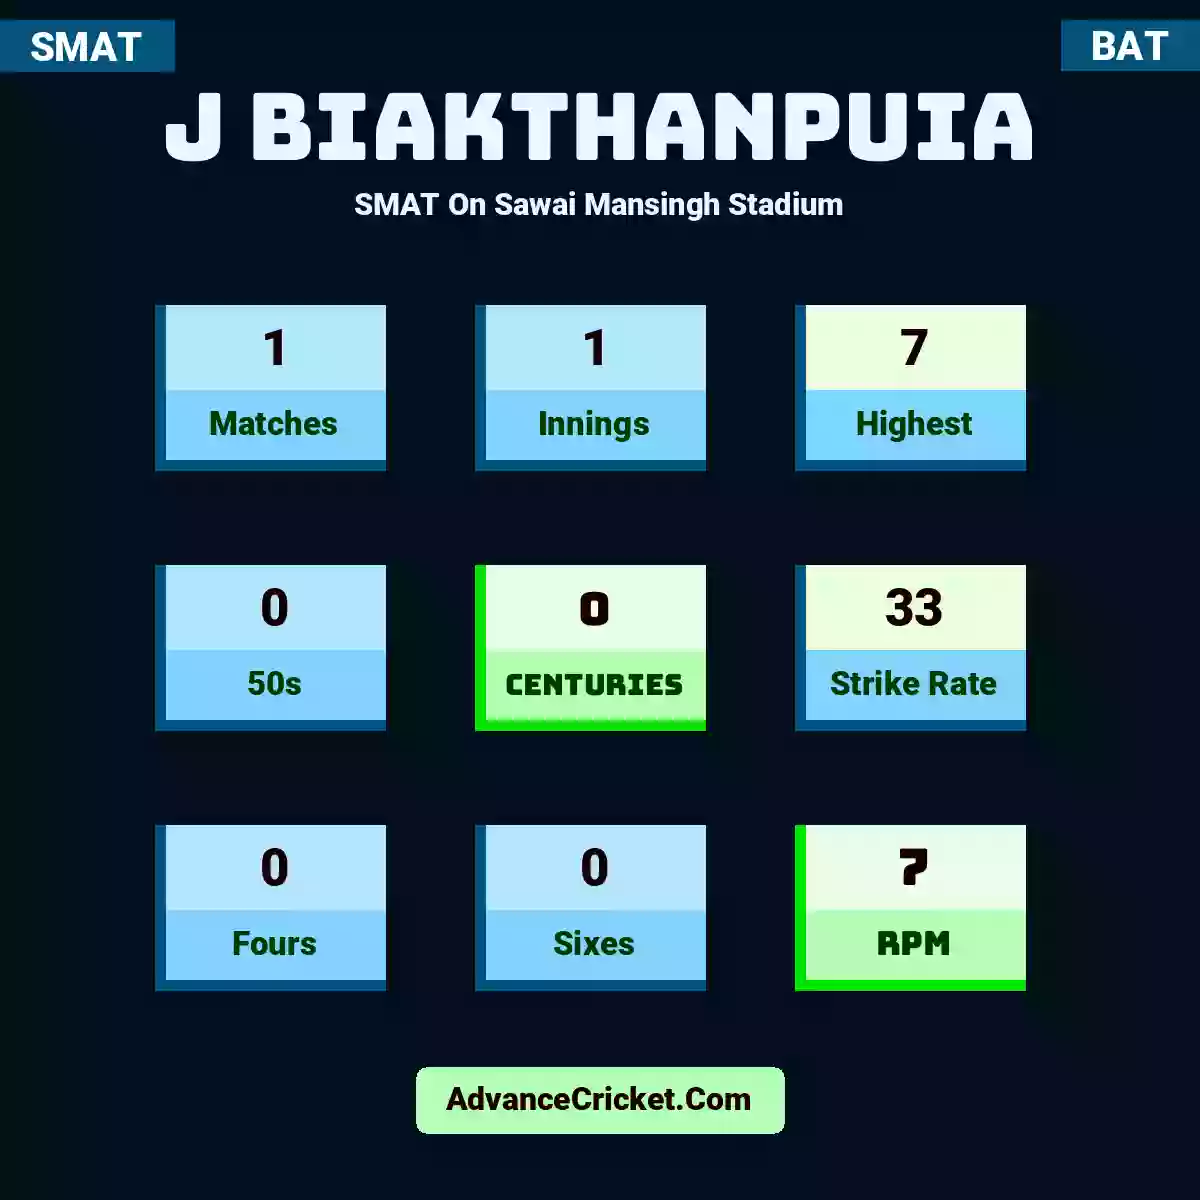 J Biakthanpuia SMAT  On Sawai Mansingh Stadium, J Biakthanpuia played 1 matches, scored 7 runs as highest, 0 half-centuries, and 0 centuries, with a strike rate of 33. J.Biakthanpuia hit 0 fours and 0 sixes, with an RPM of 7.